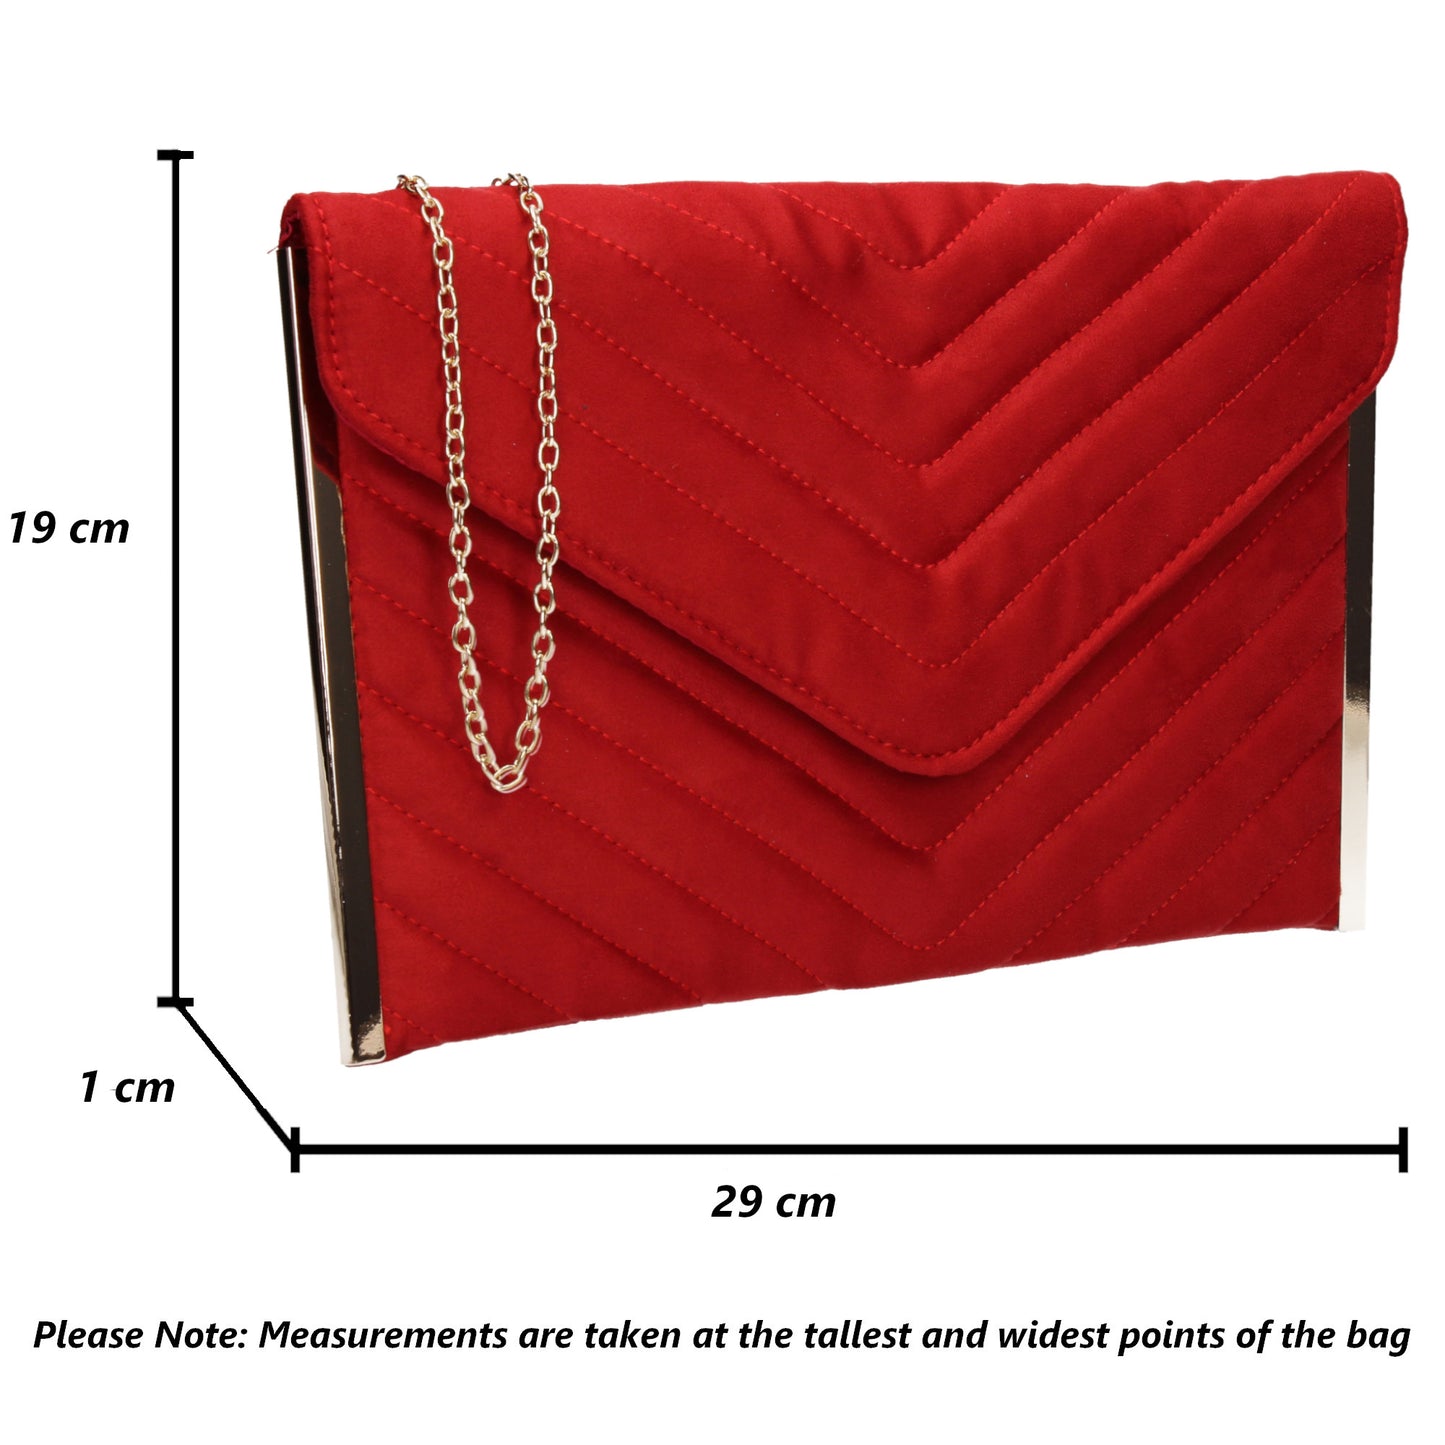 SWANKYSWANS Tessa Clutch Bag Red Cute Cheap Clutch Bag For Weddings School and Work